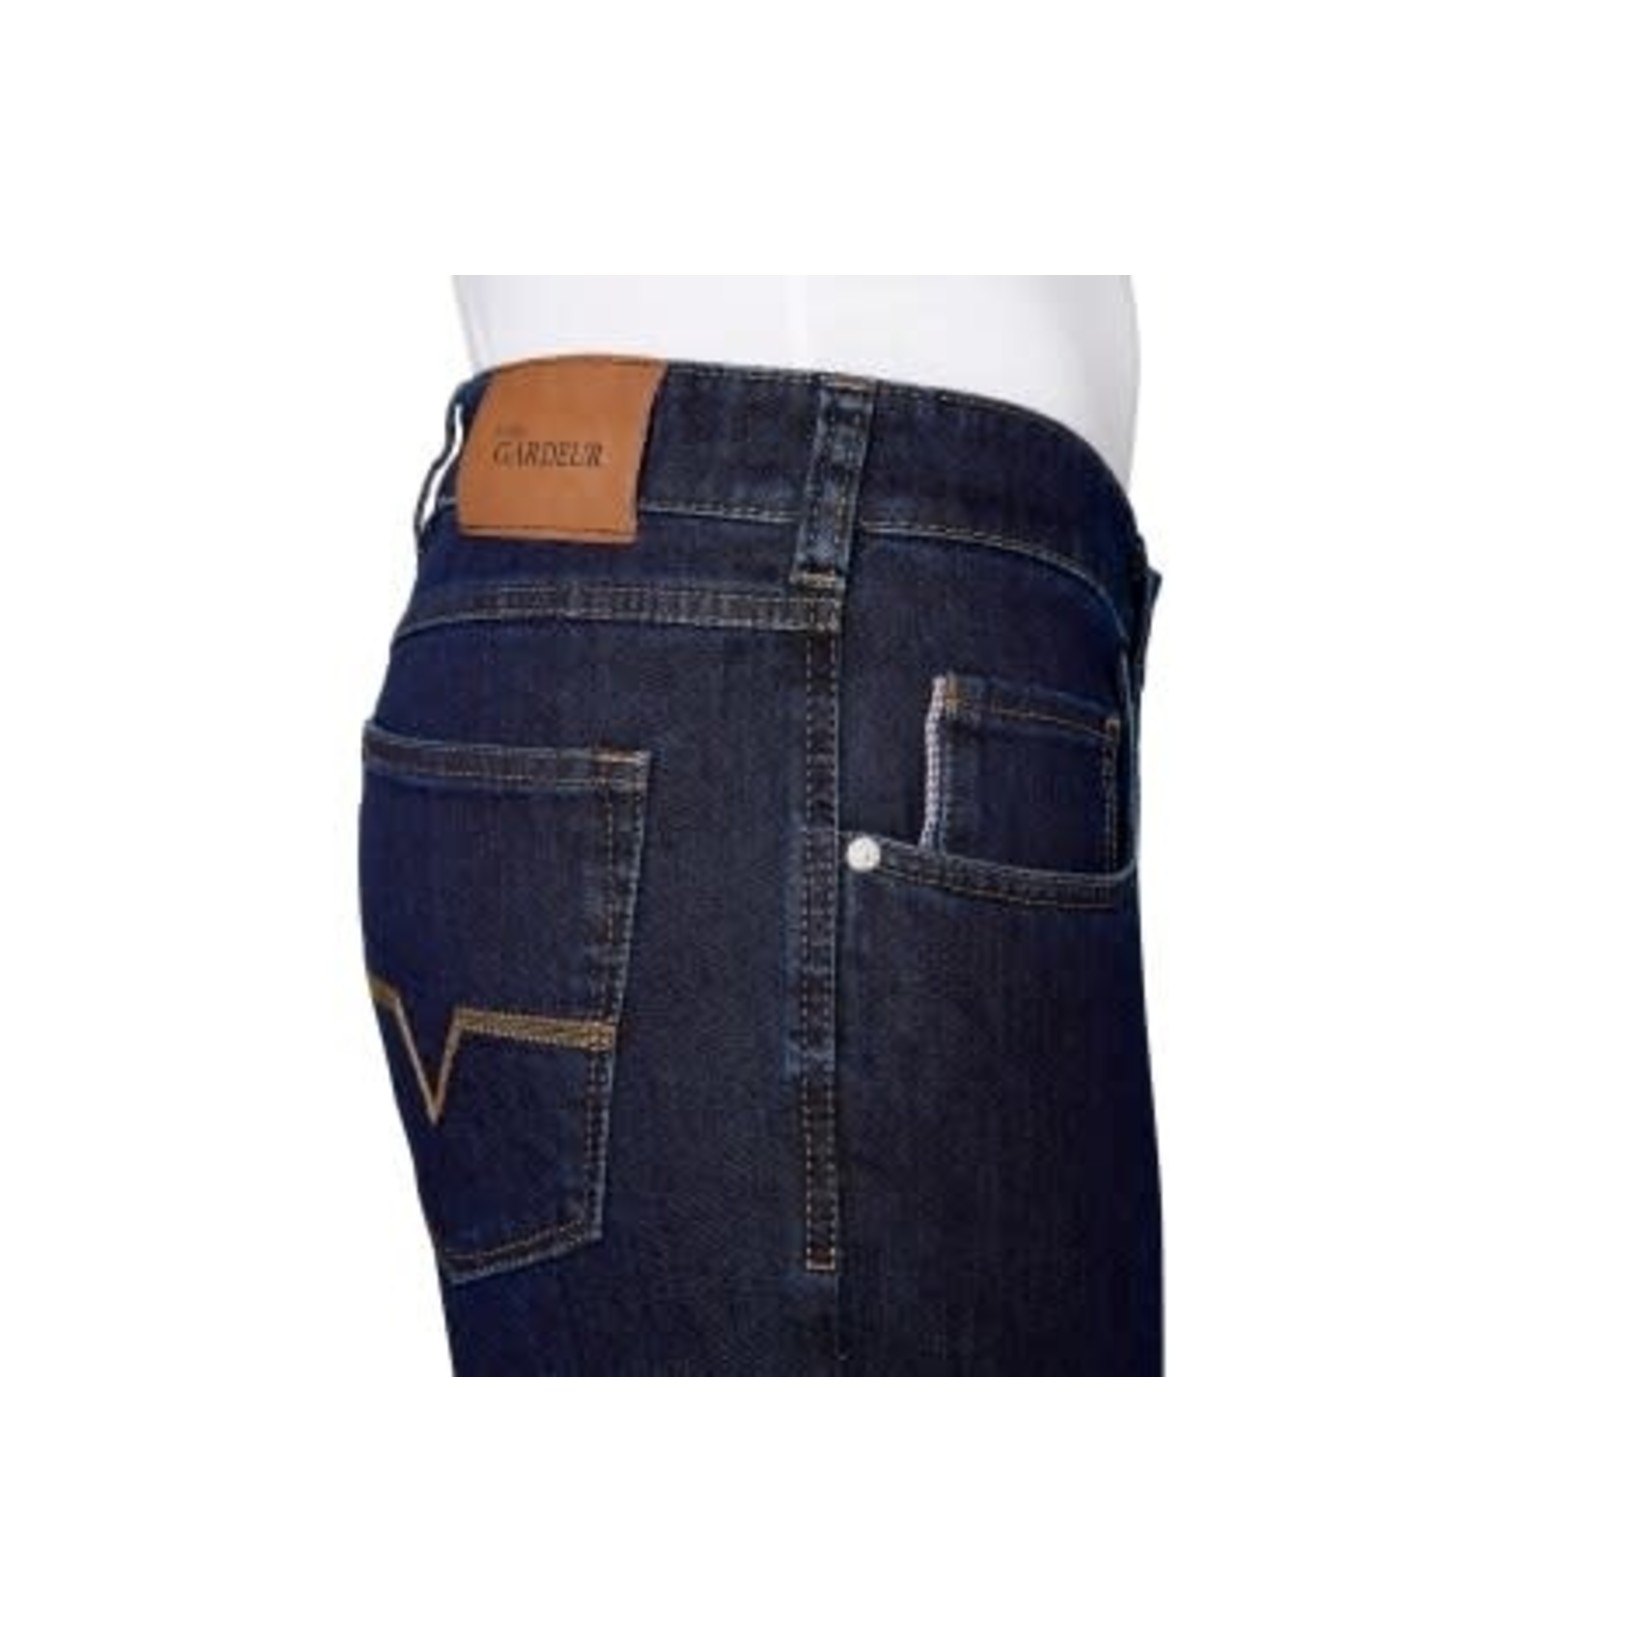 wijsvinger Verspreiding Buigen Gardeur Nevio-11 jeans donkerblauw 470181-069 | Tim Menswear - Tim Menswear